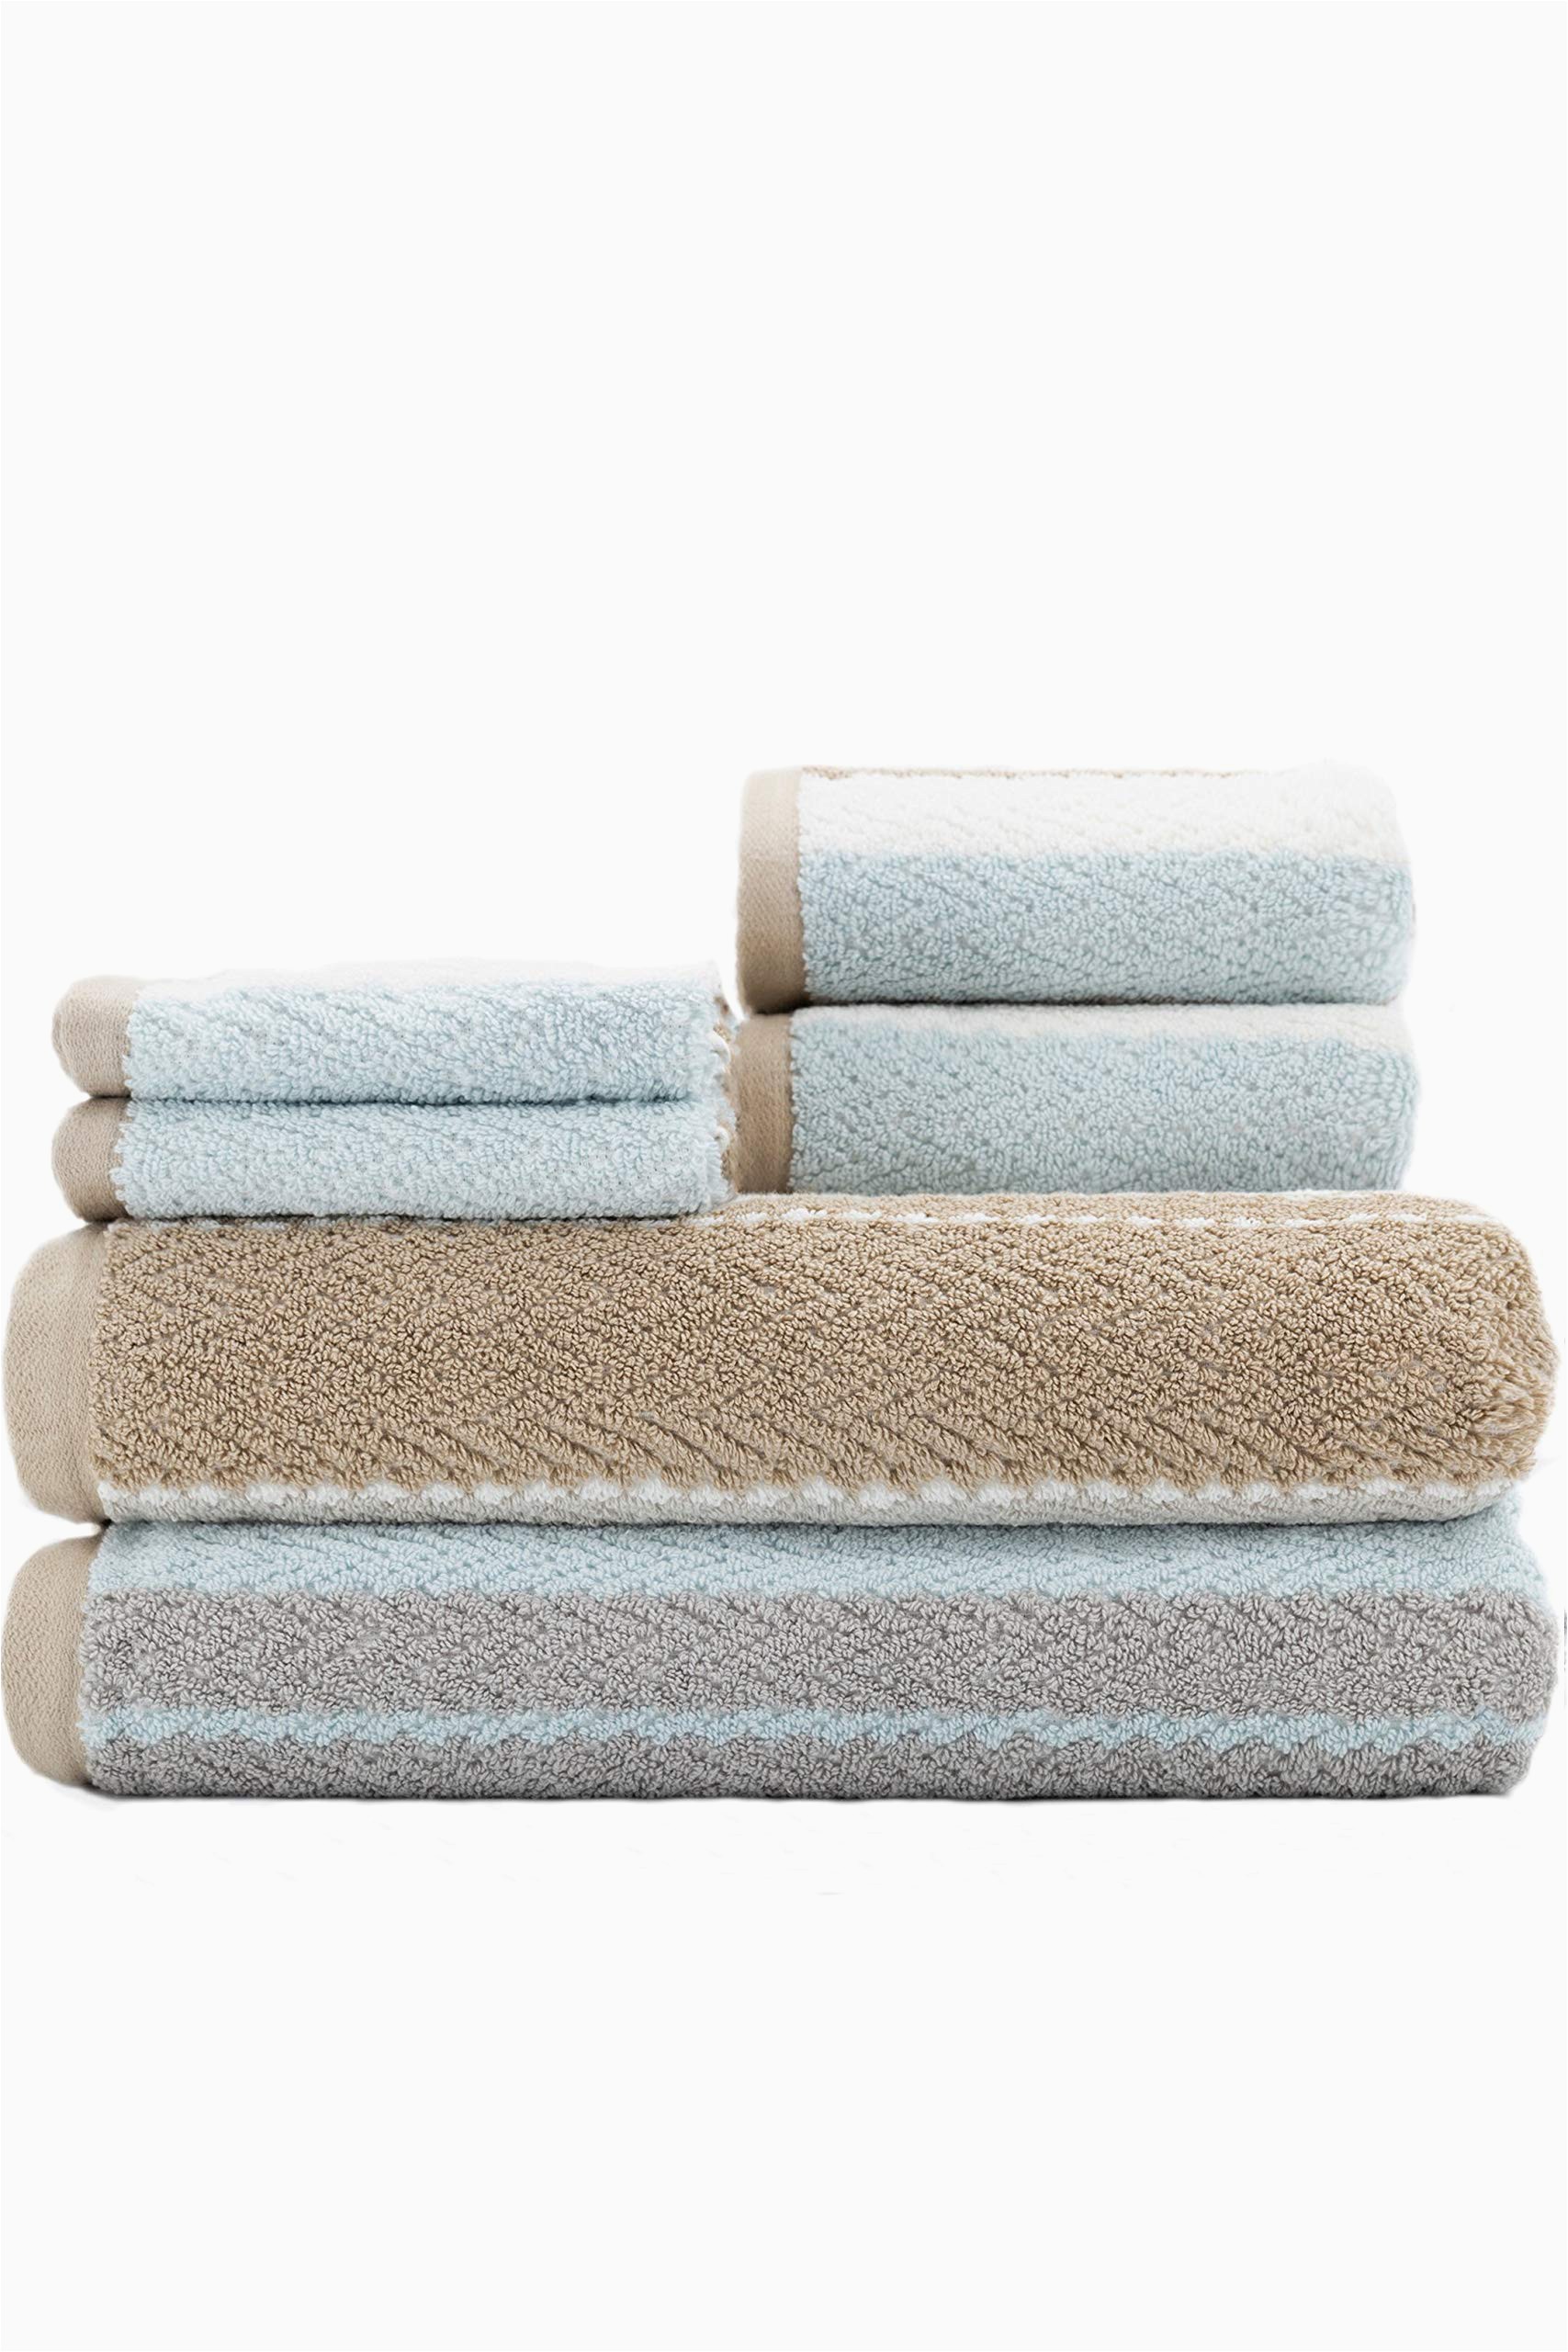 Caro Home Bath Rugs Caro Home Addison Brown 6 Piece Bath towel Set 2 Bath towels 2 Hand towels 2 Face towels Bed Cotton Premium Quality Multi Pattern Color